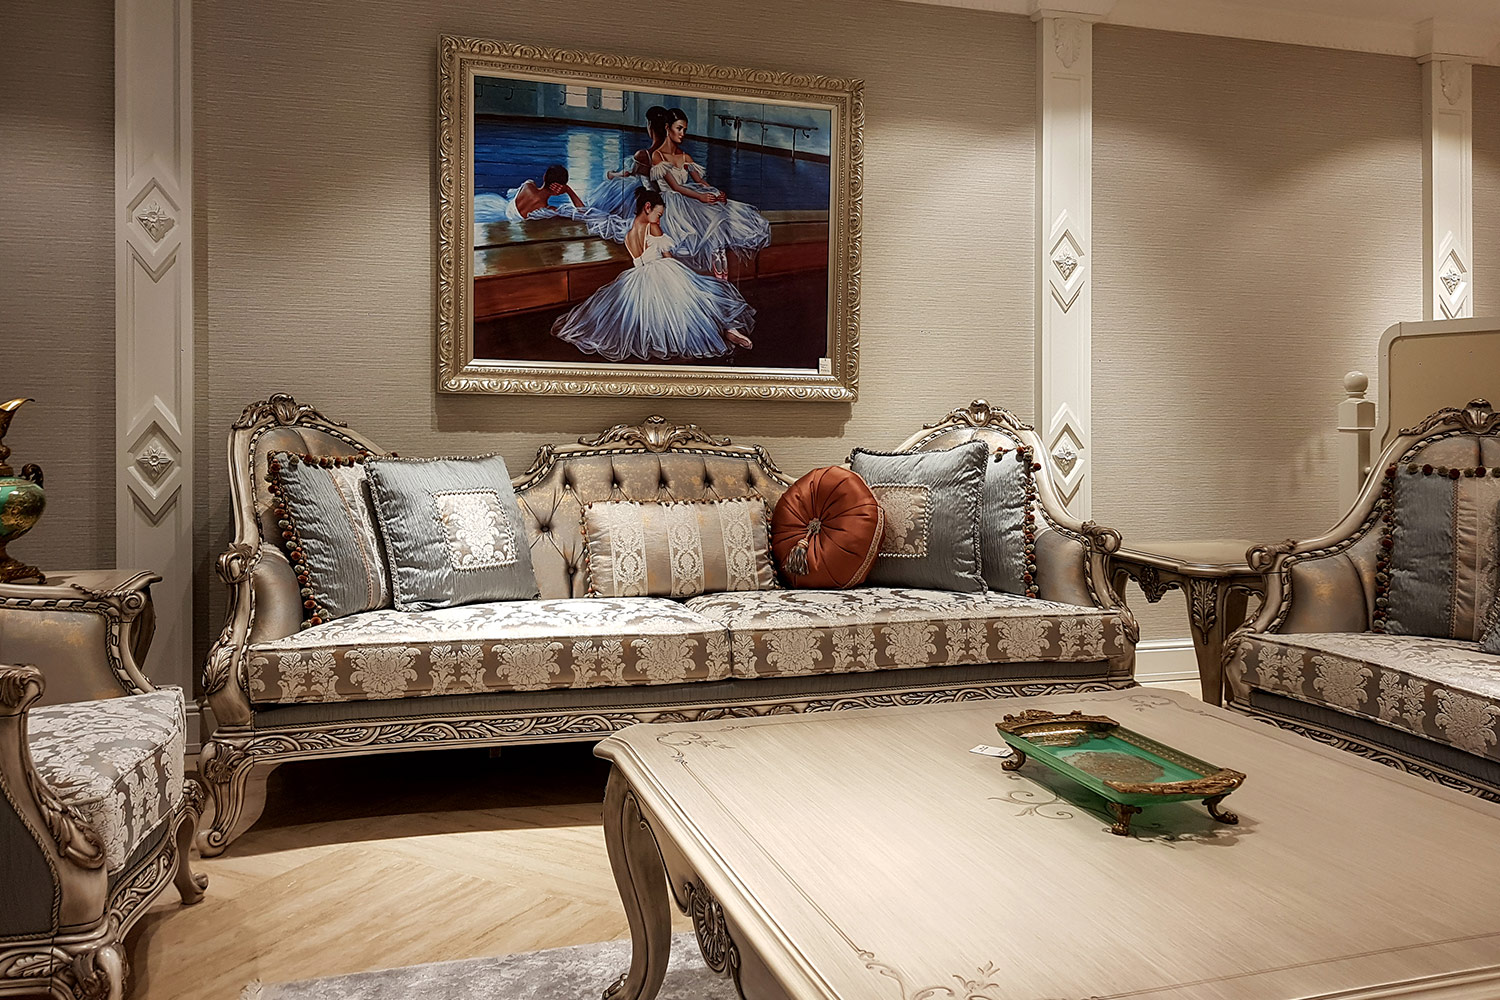 Mirage Furniture - Mona Lisa Living Room